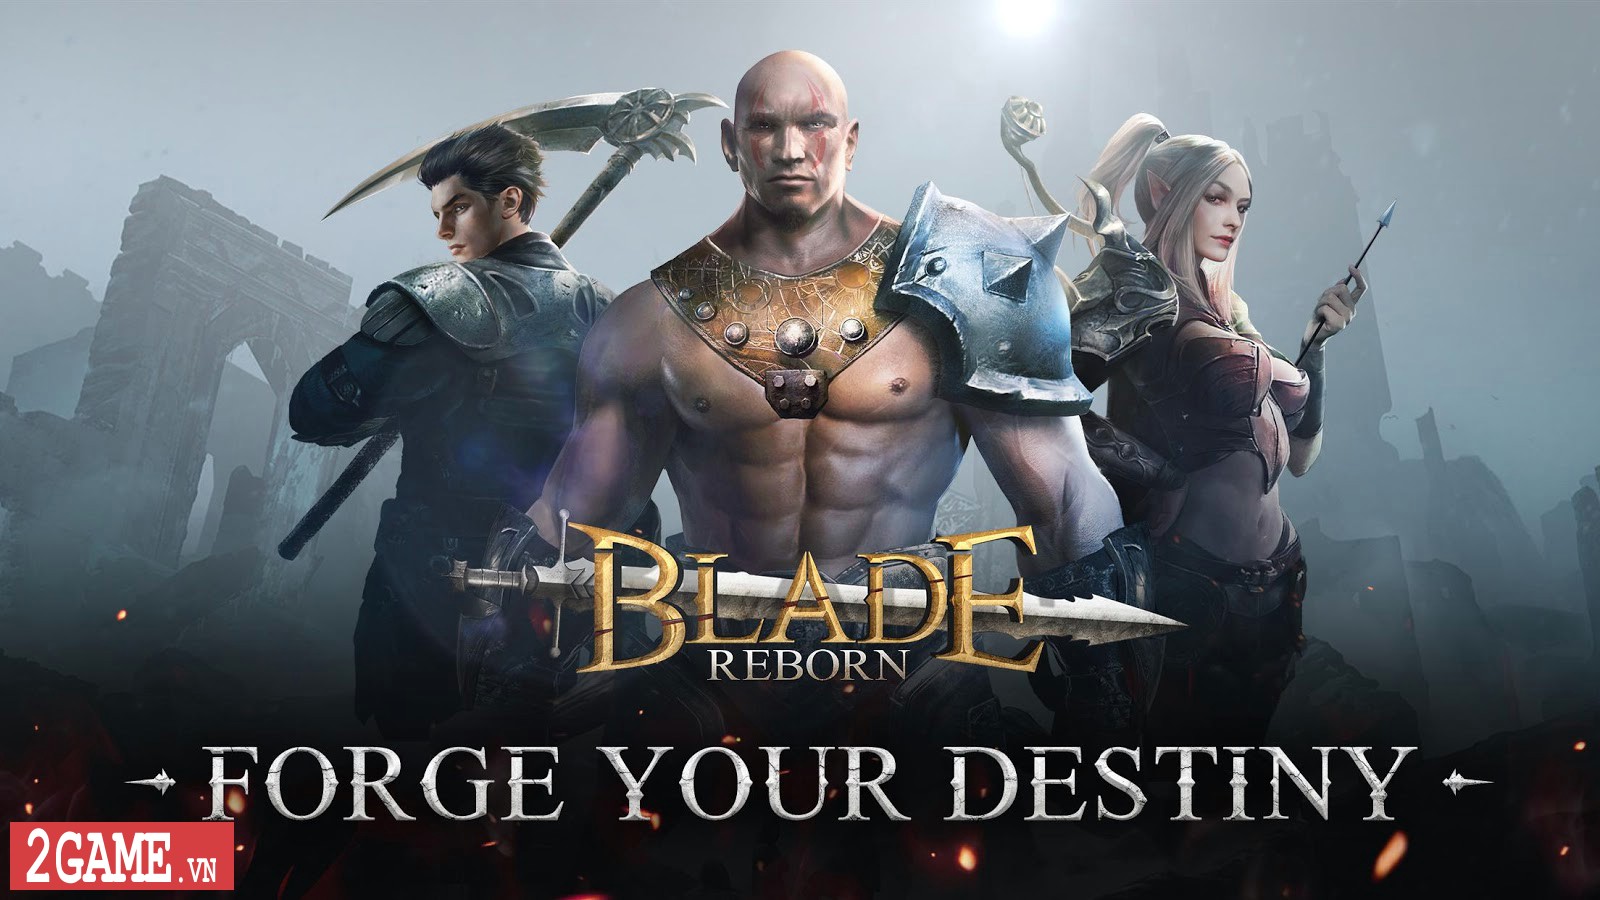 2game-Blade-Reborn-mobile-anh-2.jpg (1600×900)